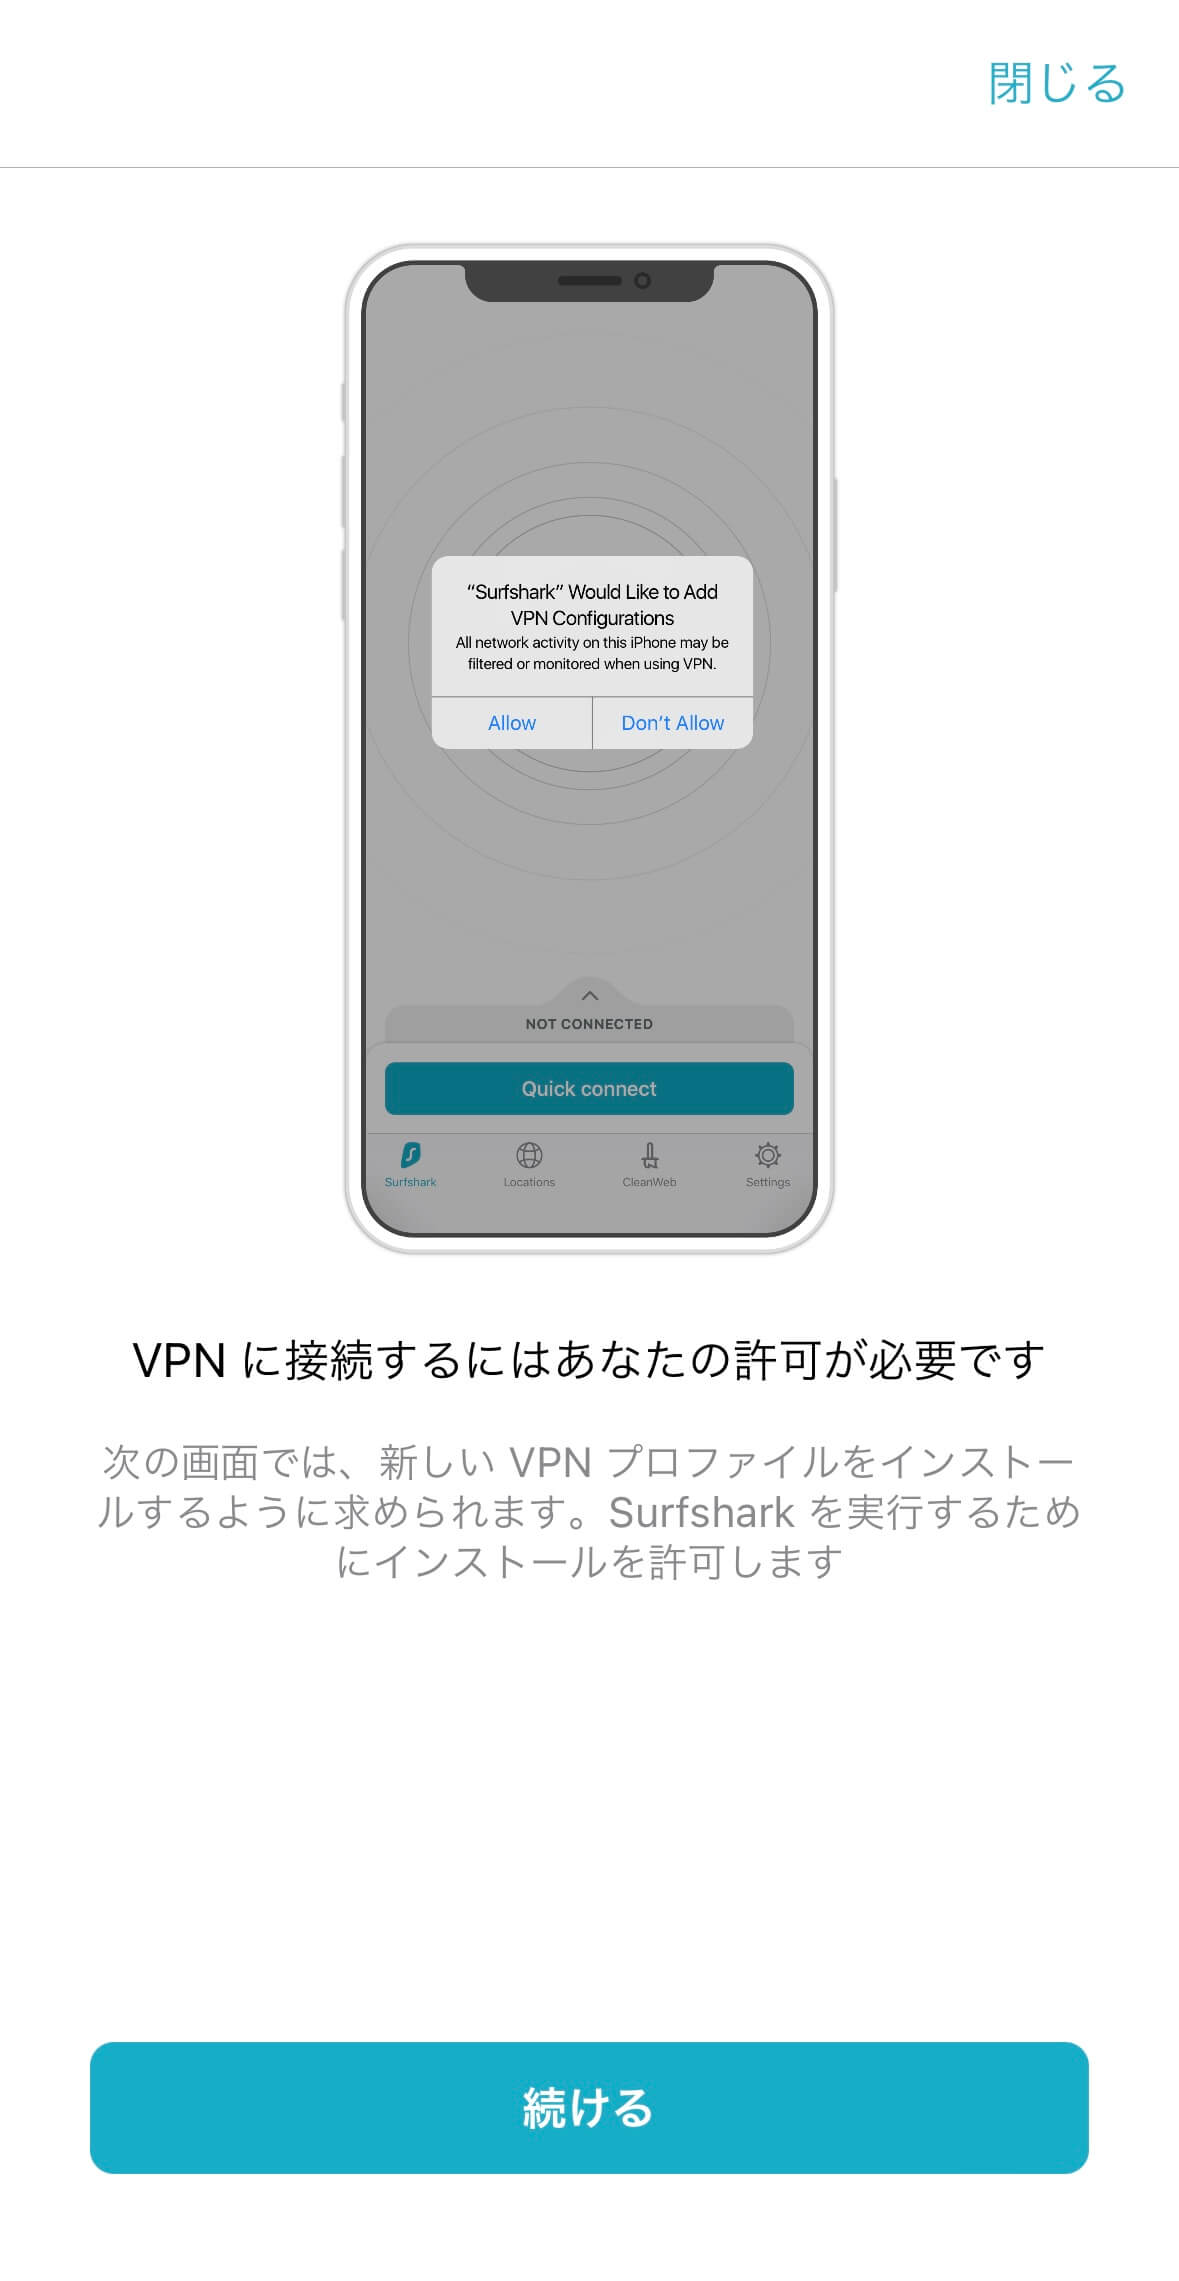 VPN接続の許可「続ける」をタップする